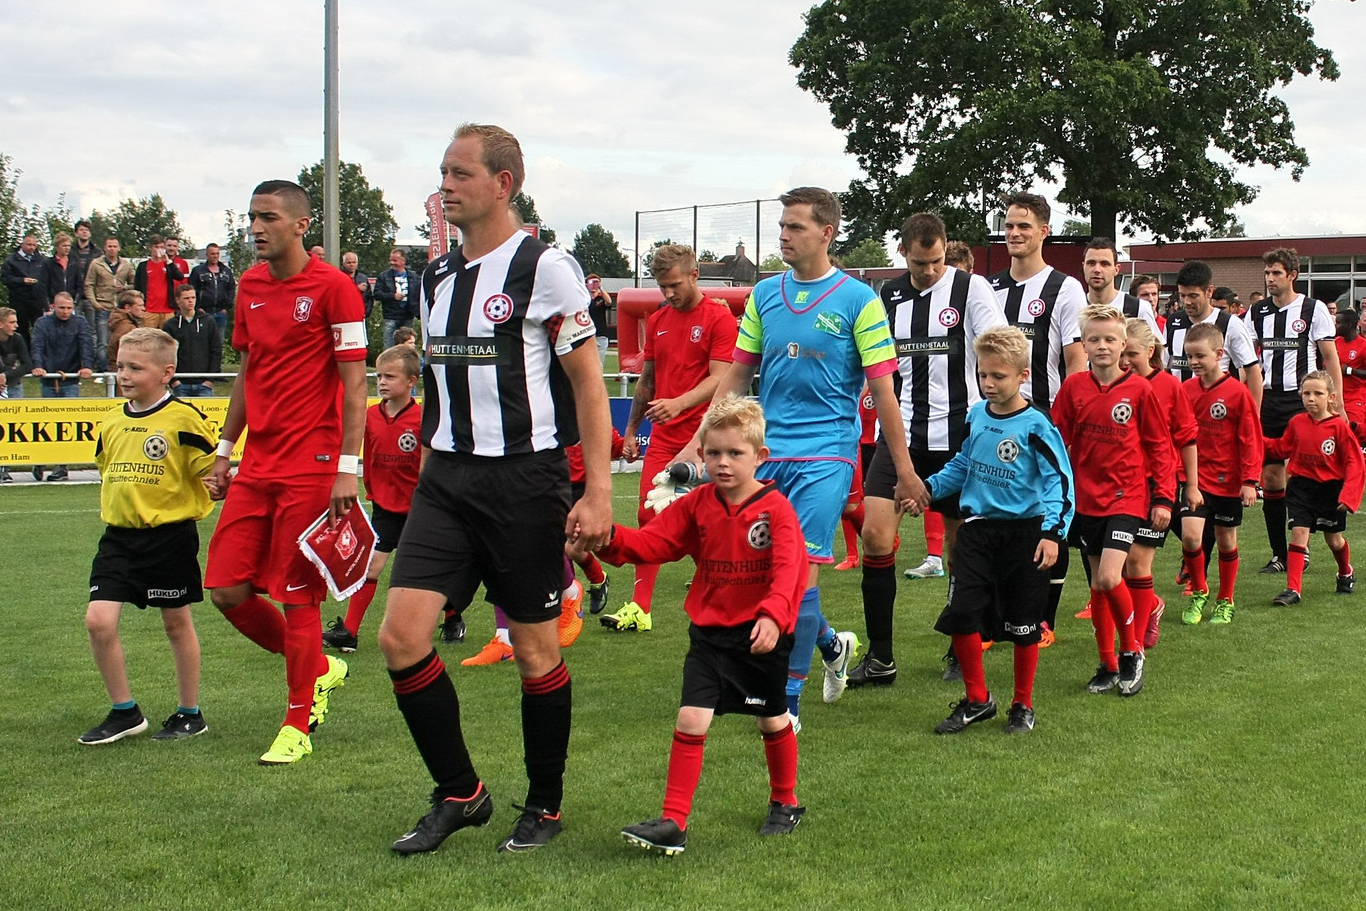 Karel Pullen Regioteam Hardenberg - FC Twente